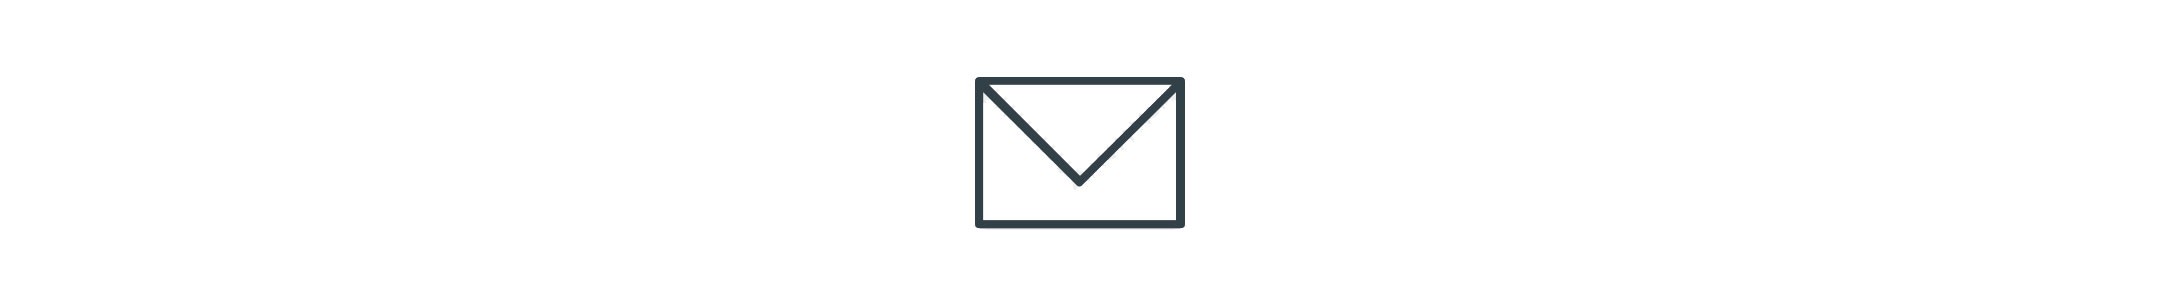 Envelope icon shown here.